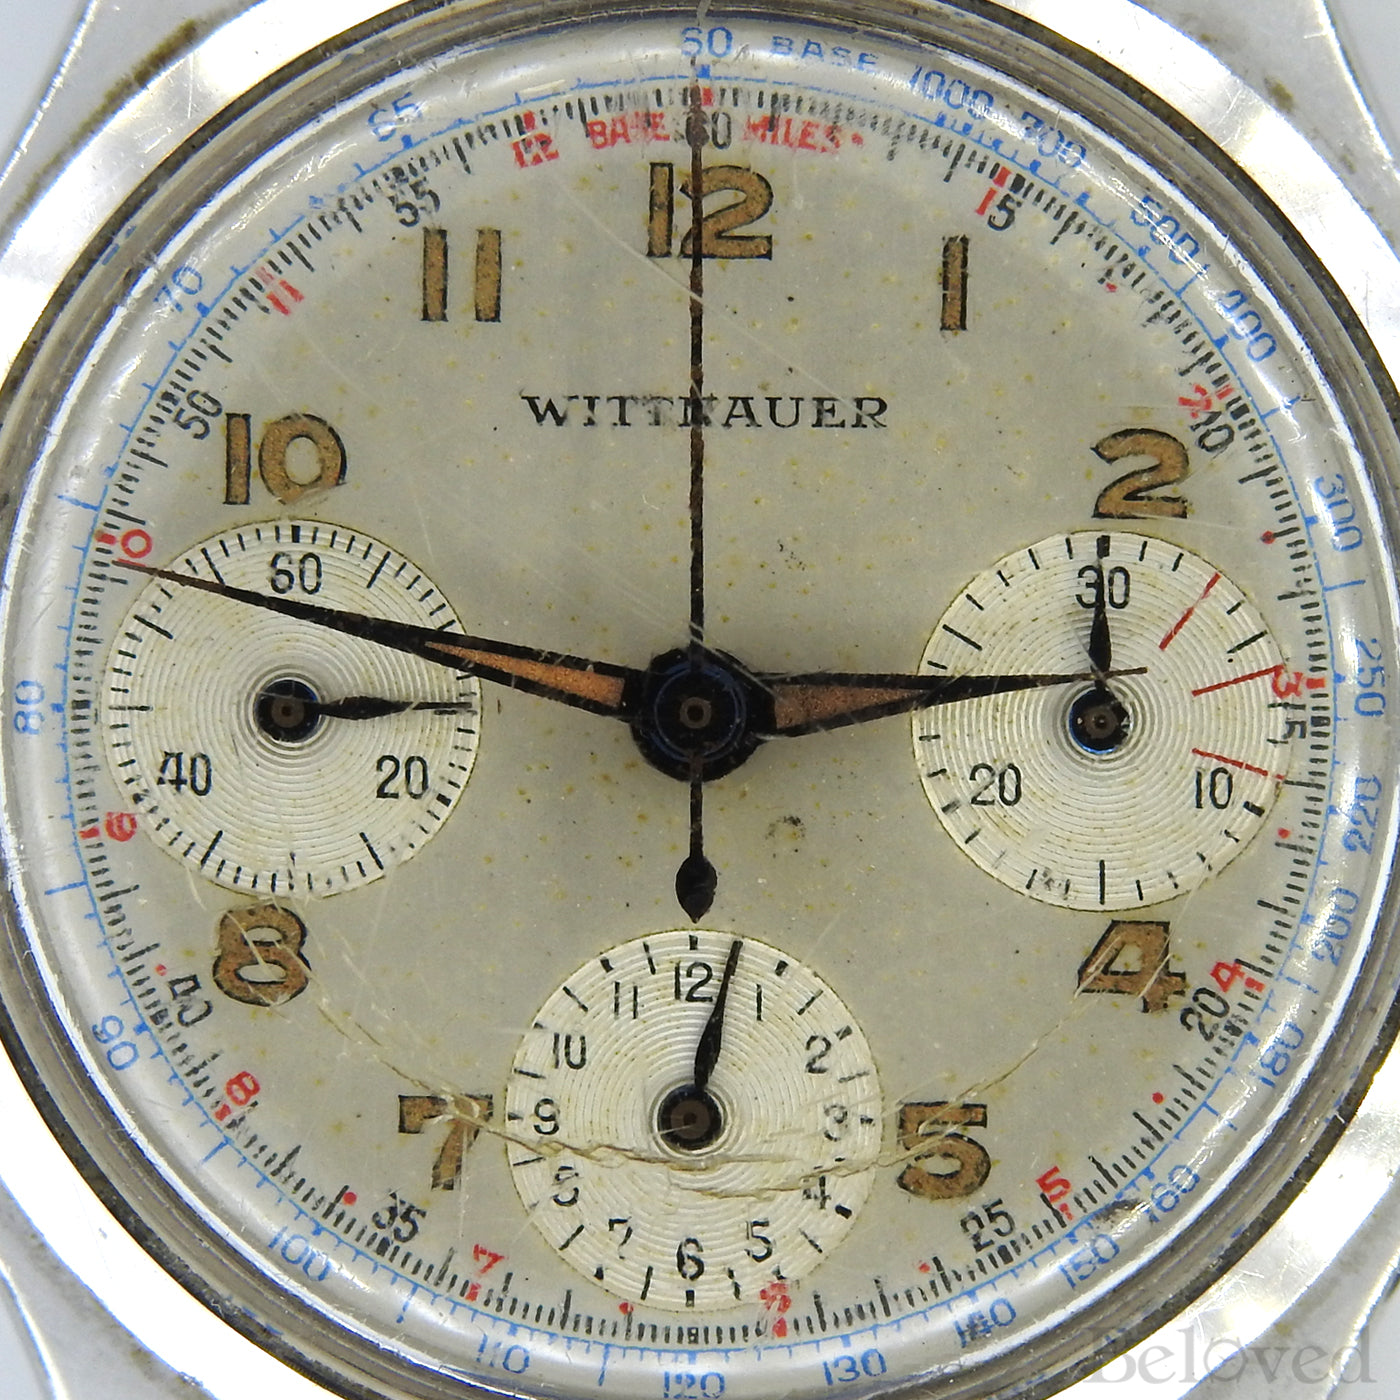 Wittnauer Chronograph Valjoux 72